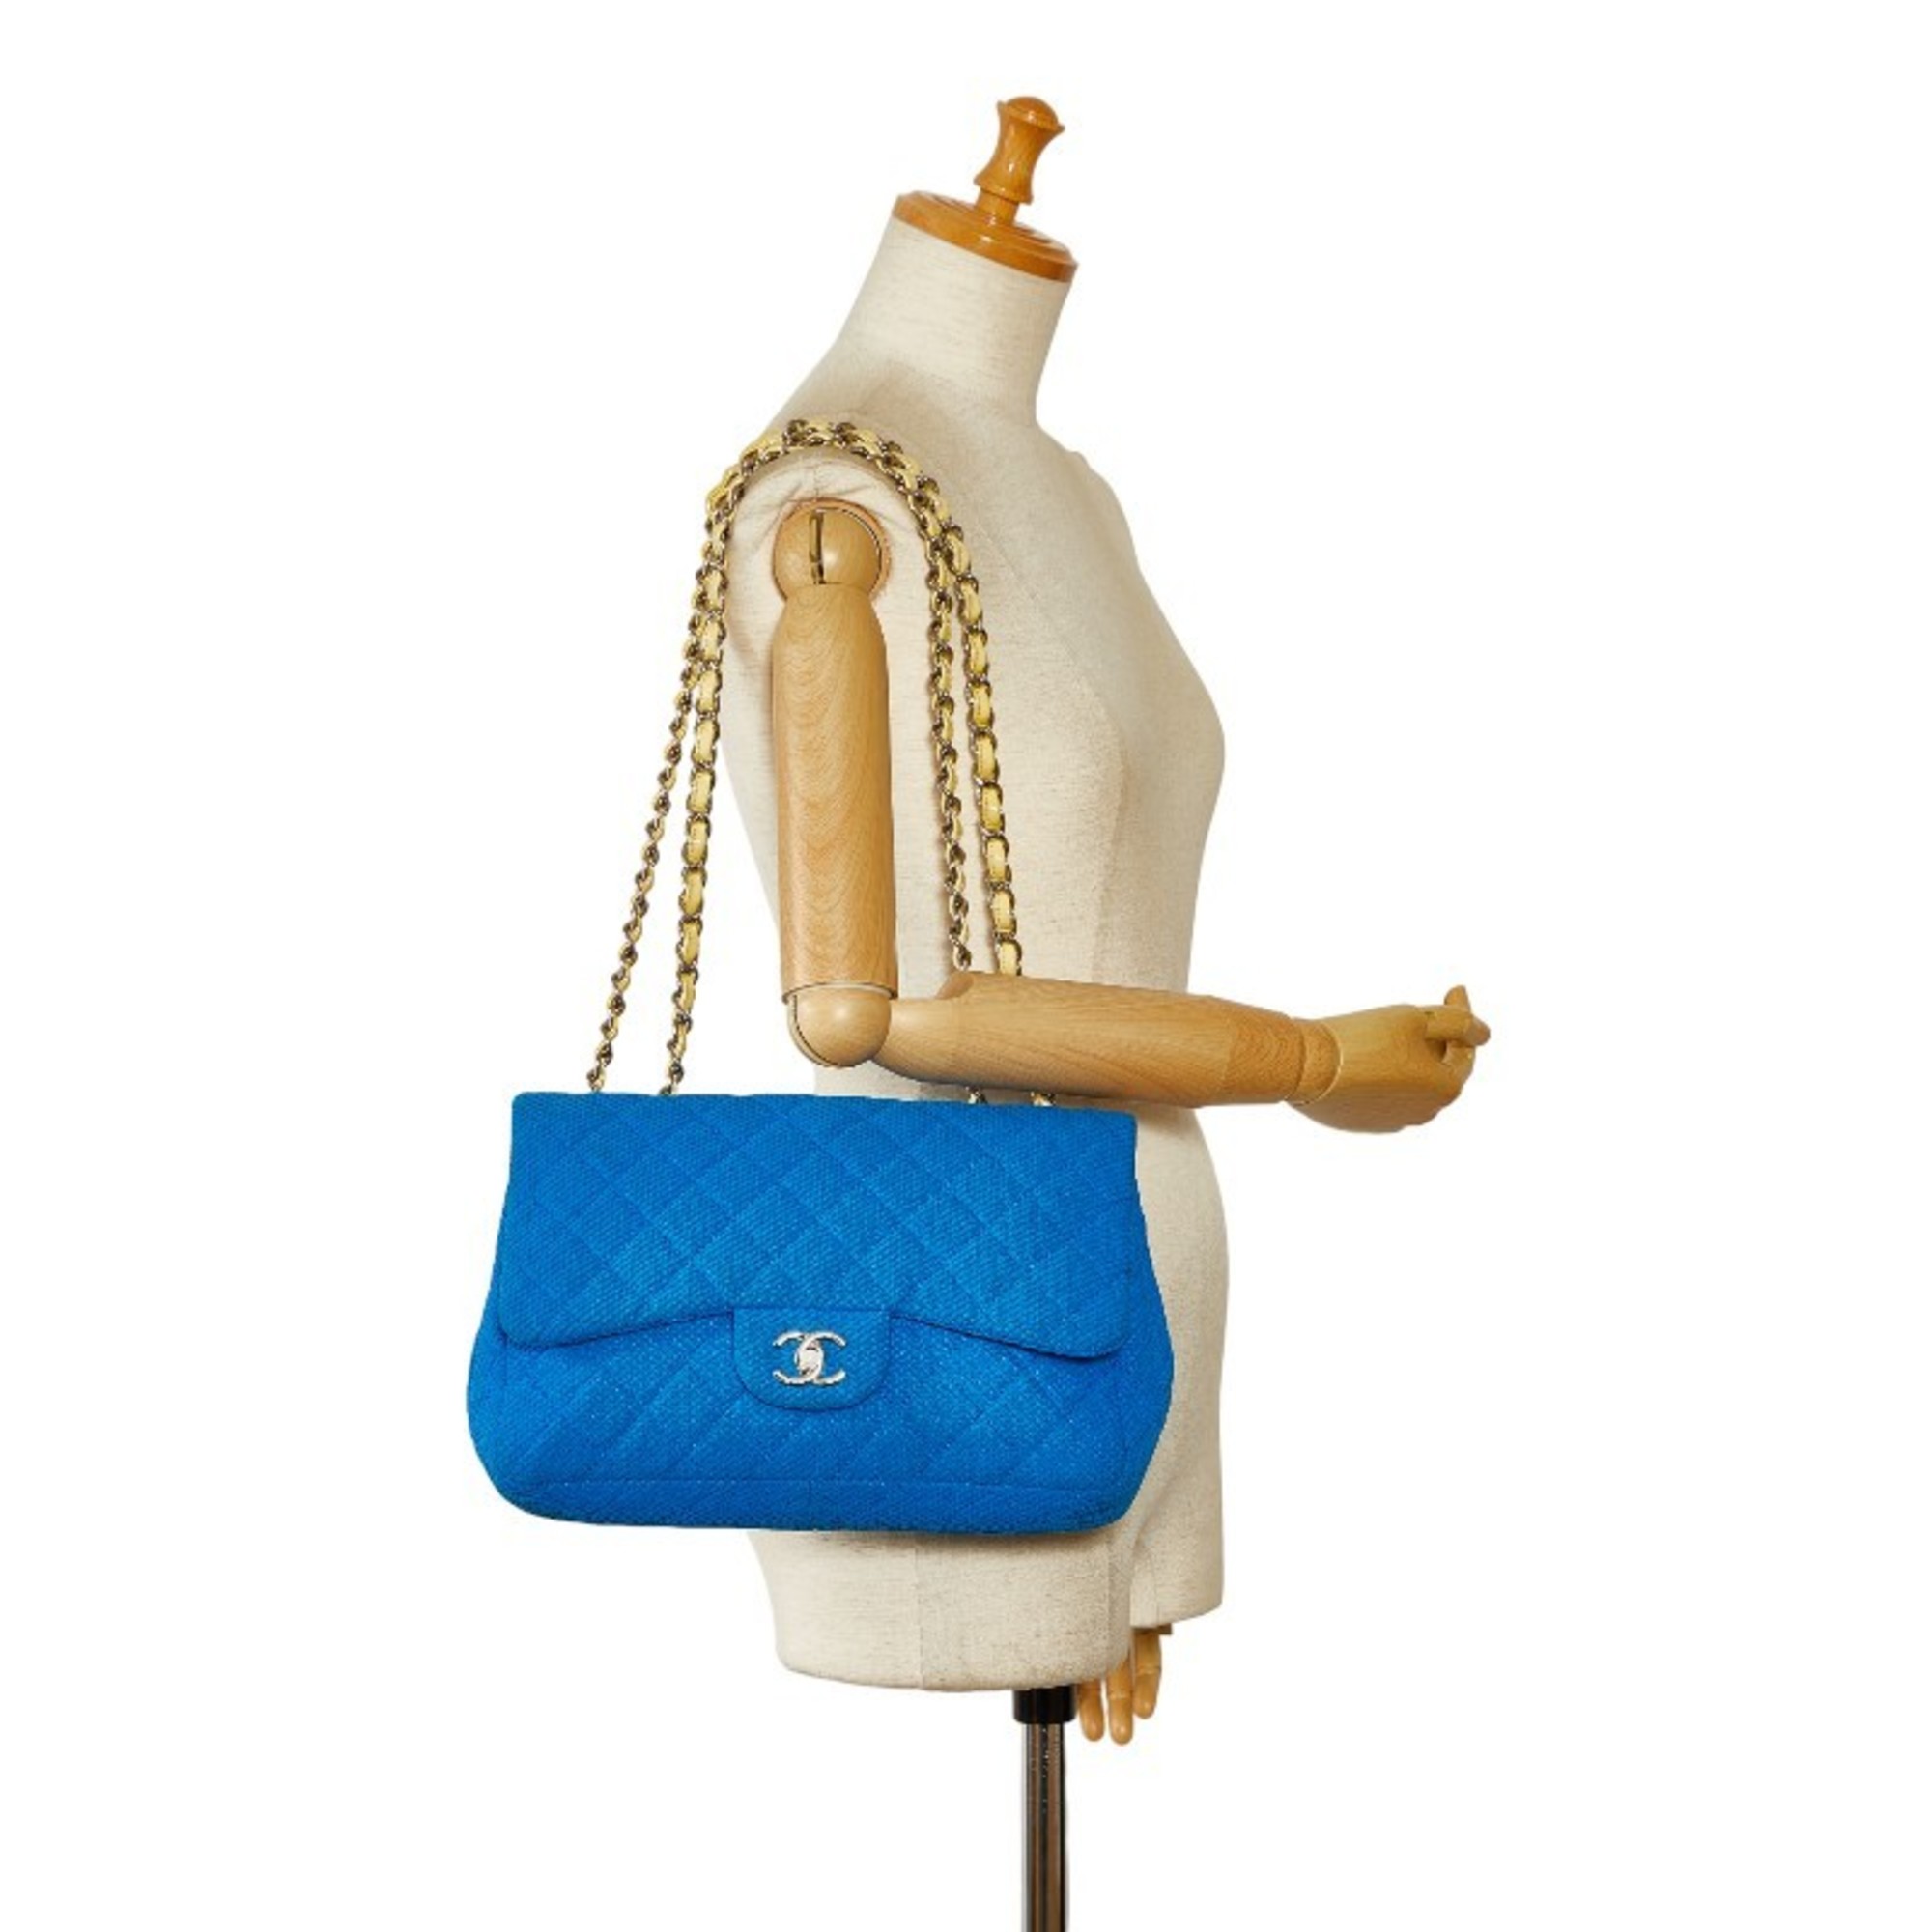 Chanel Matelasse 30 Coco Mark Handbag Shoulder Bag Blue Canvas Women's CHANEL